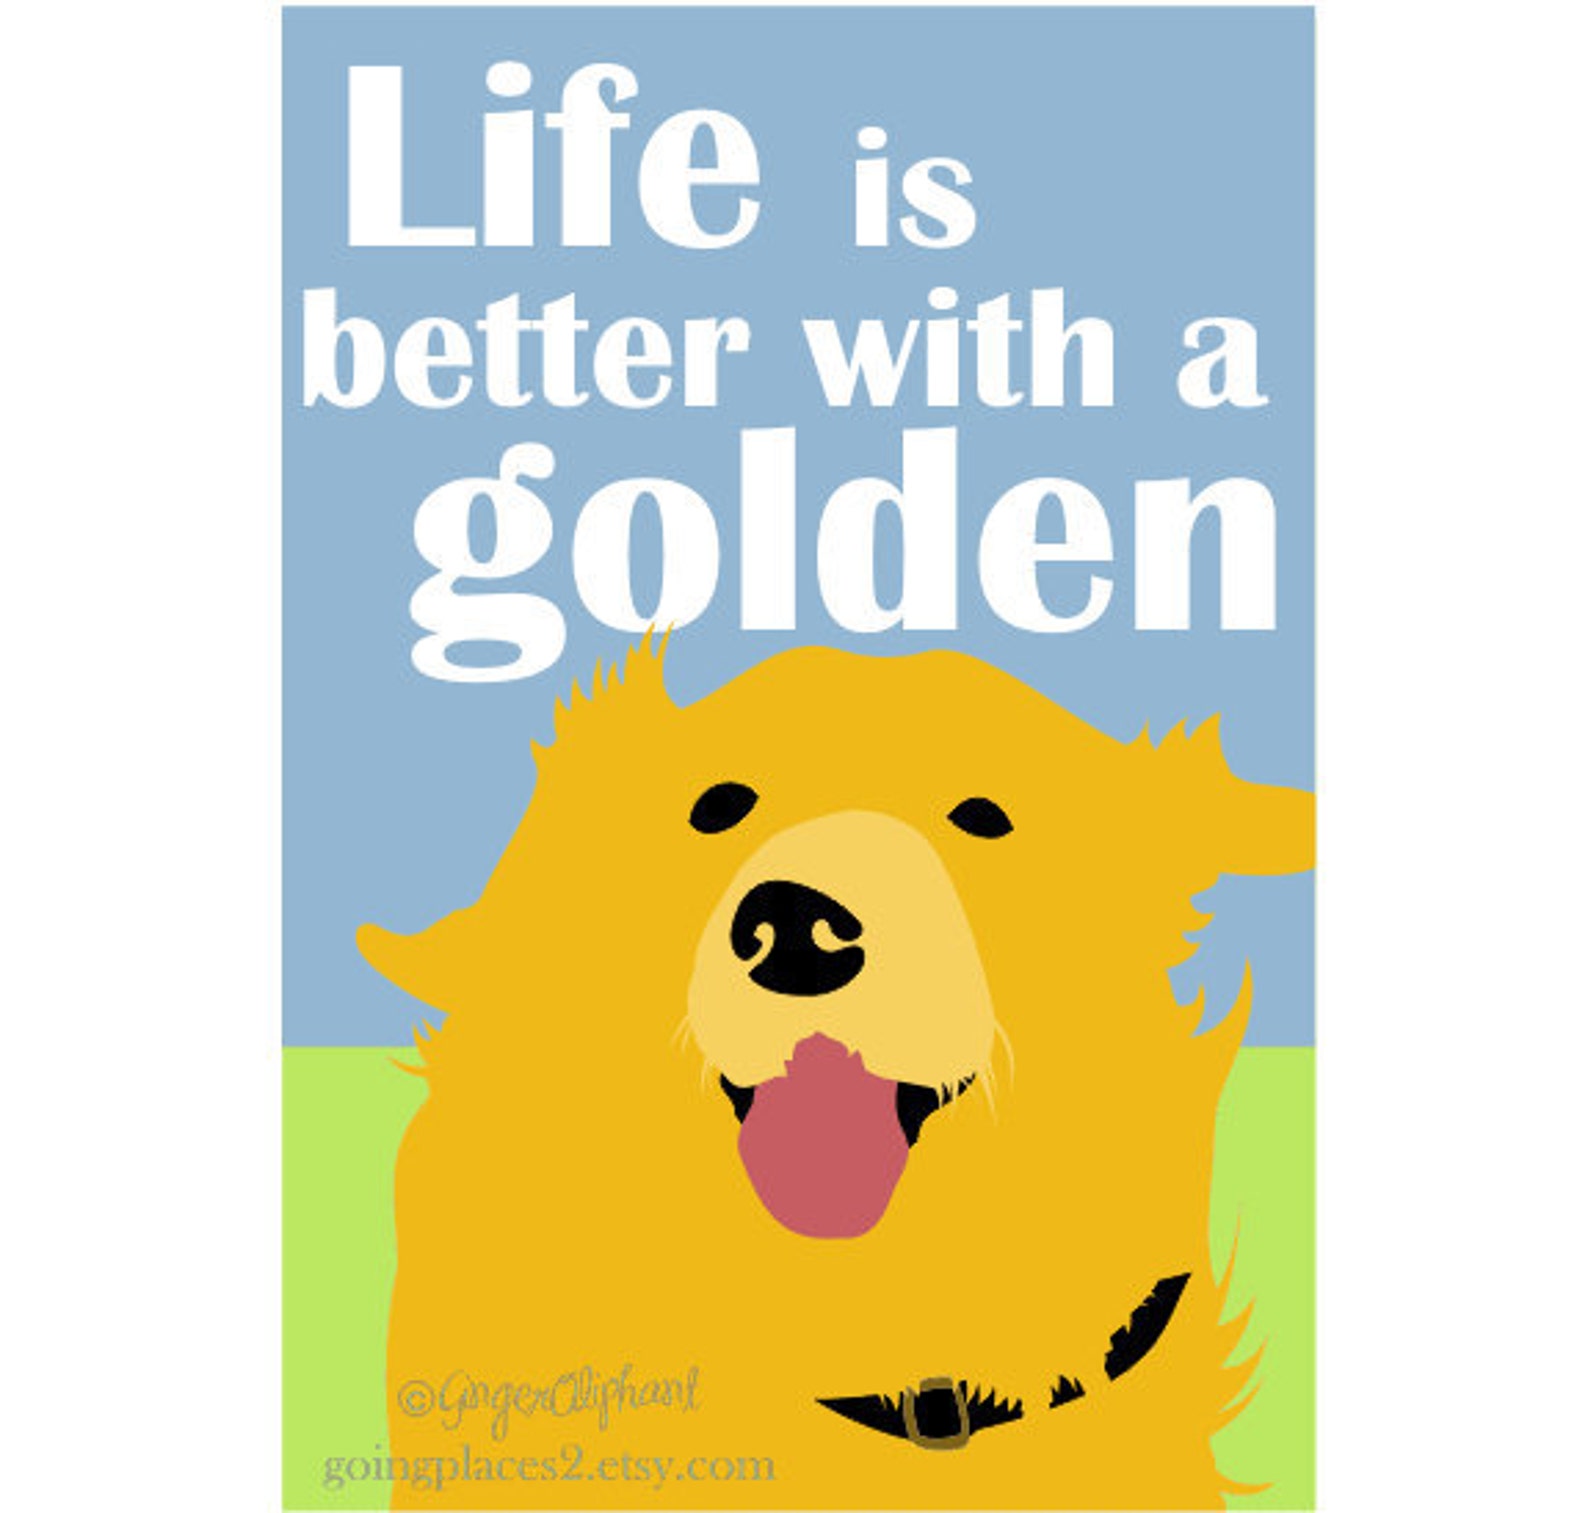 Dog Art Print Golden Retriever Art Print Life is Better Wall - Etsy